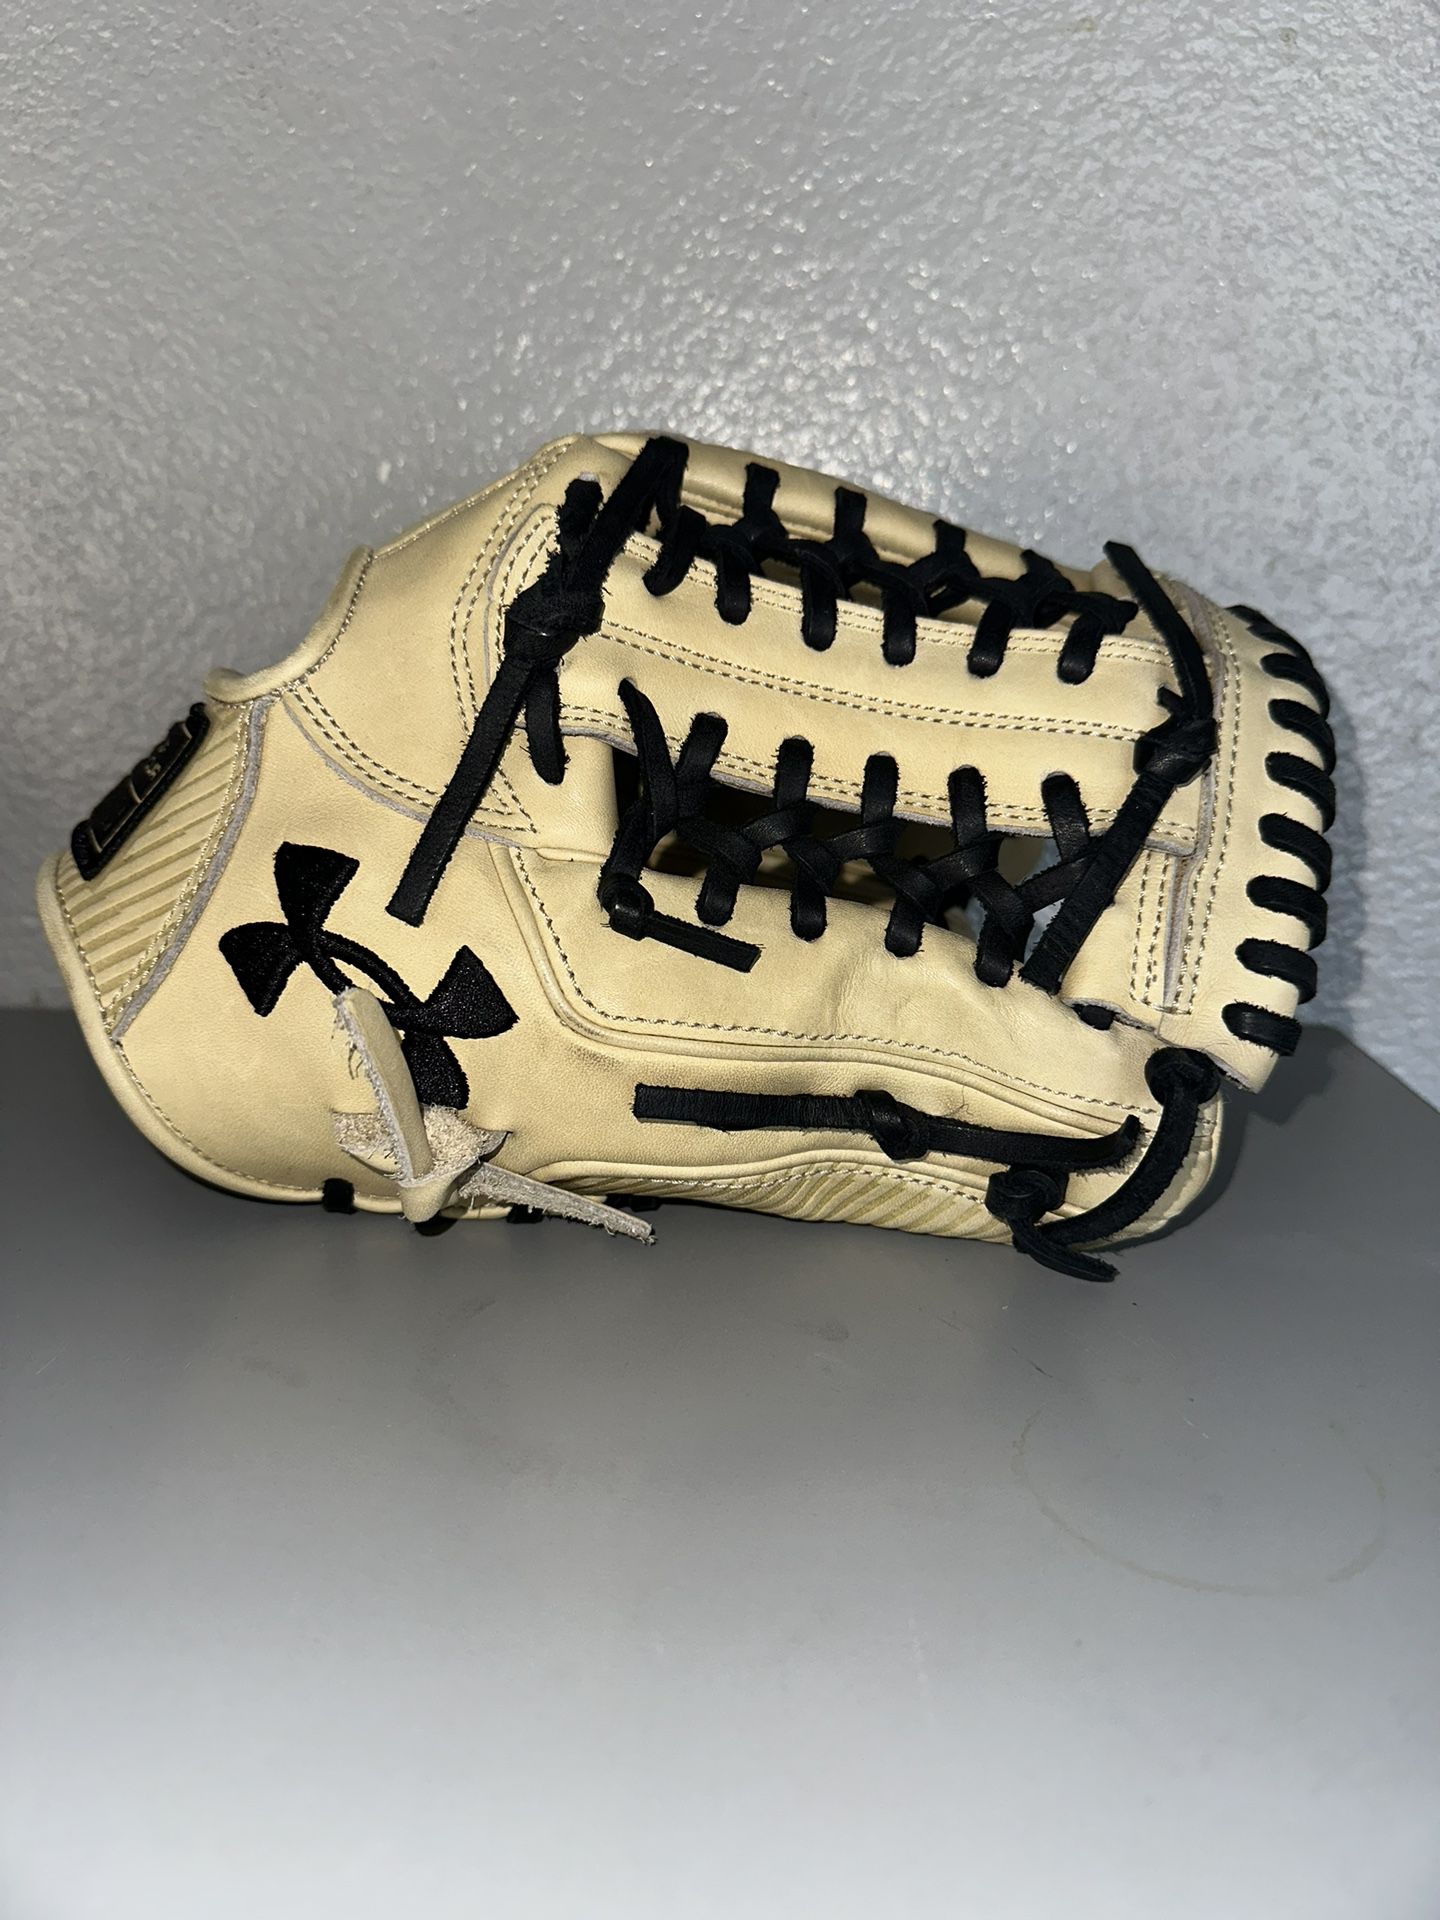 Under Armor Baseball Glove - 11.75”